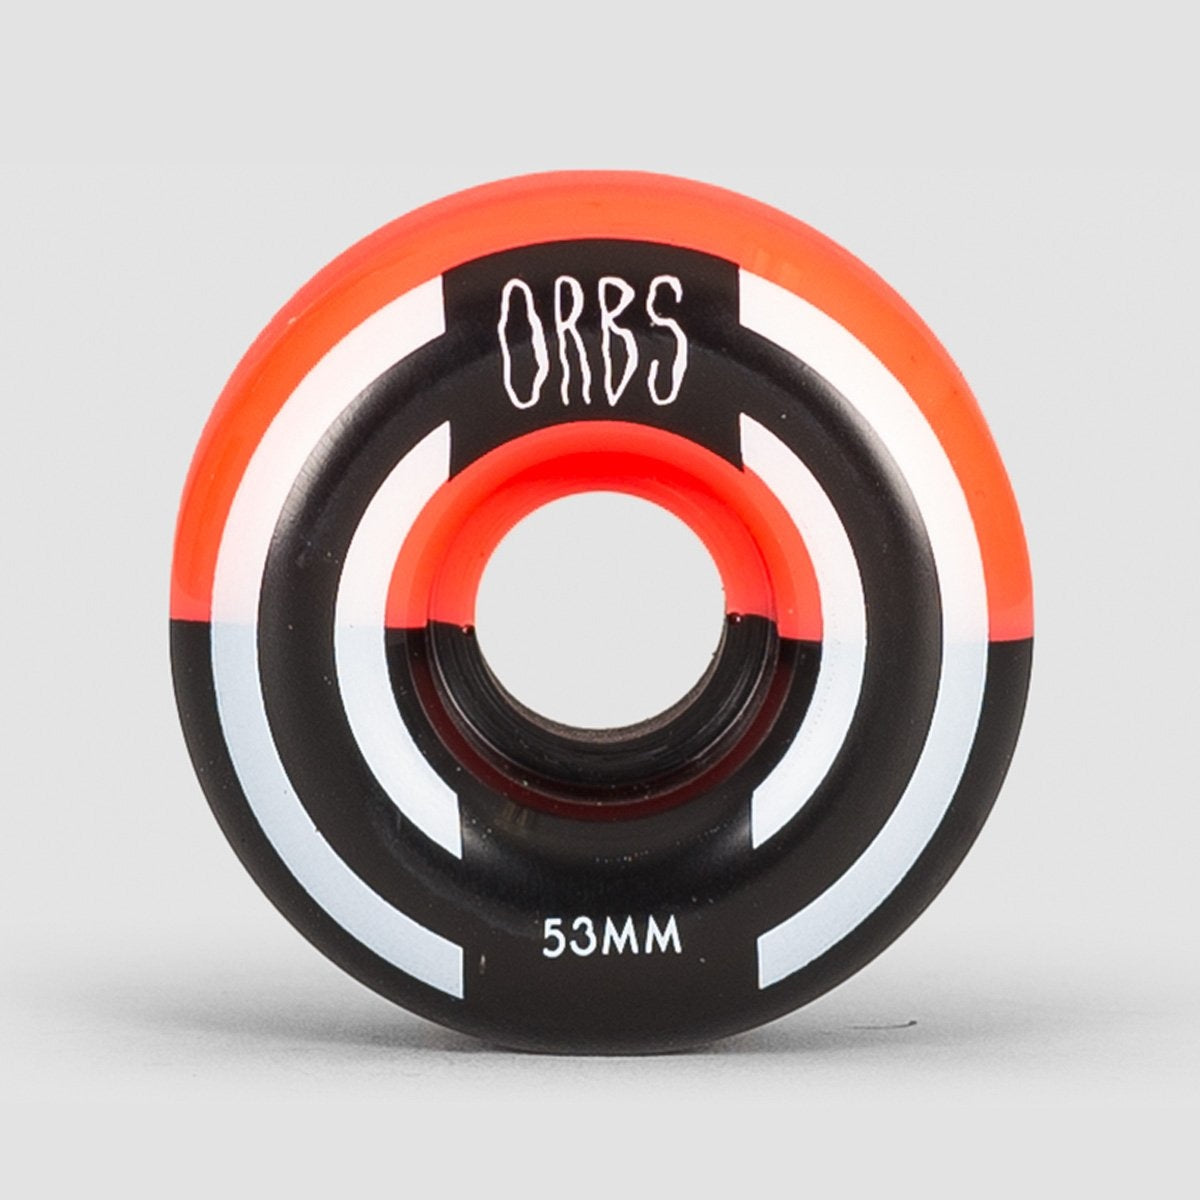 Welcome Orbs Apparitions Splits Wheels Coral/Black 53mm - Skateboard